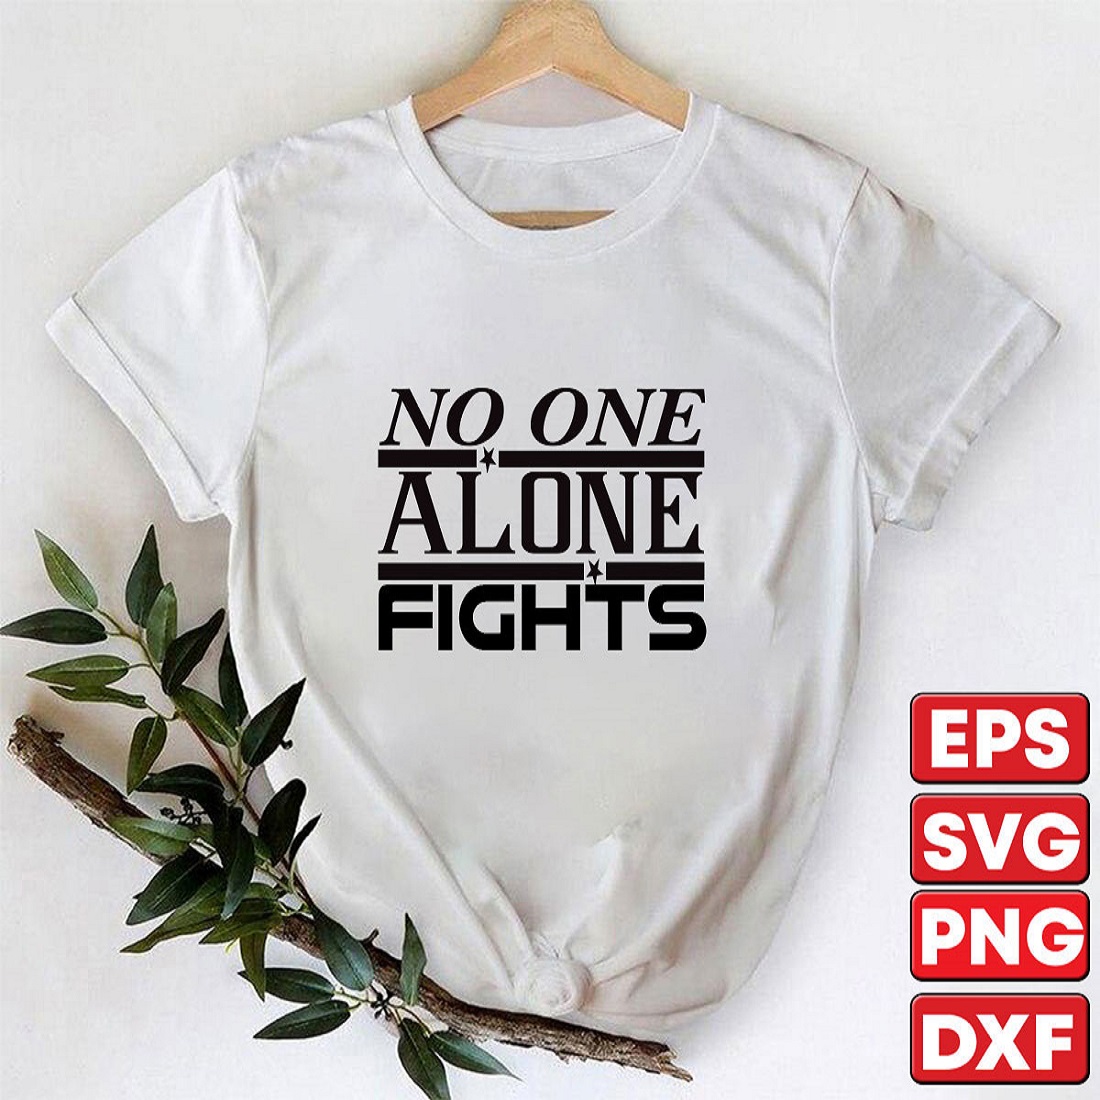 no one alone fights jj 296